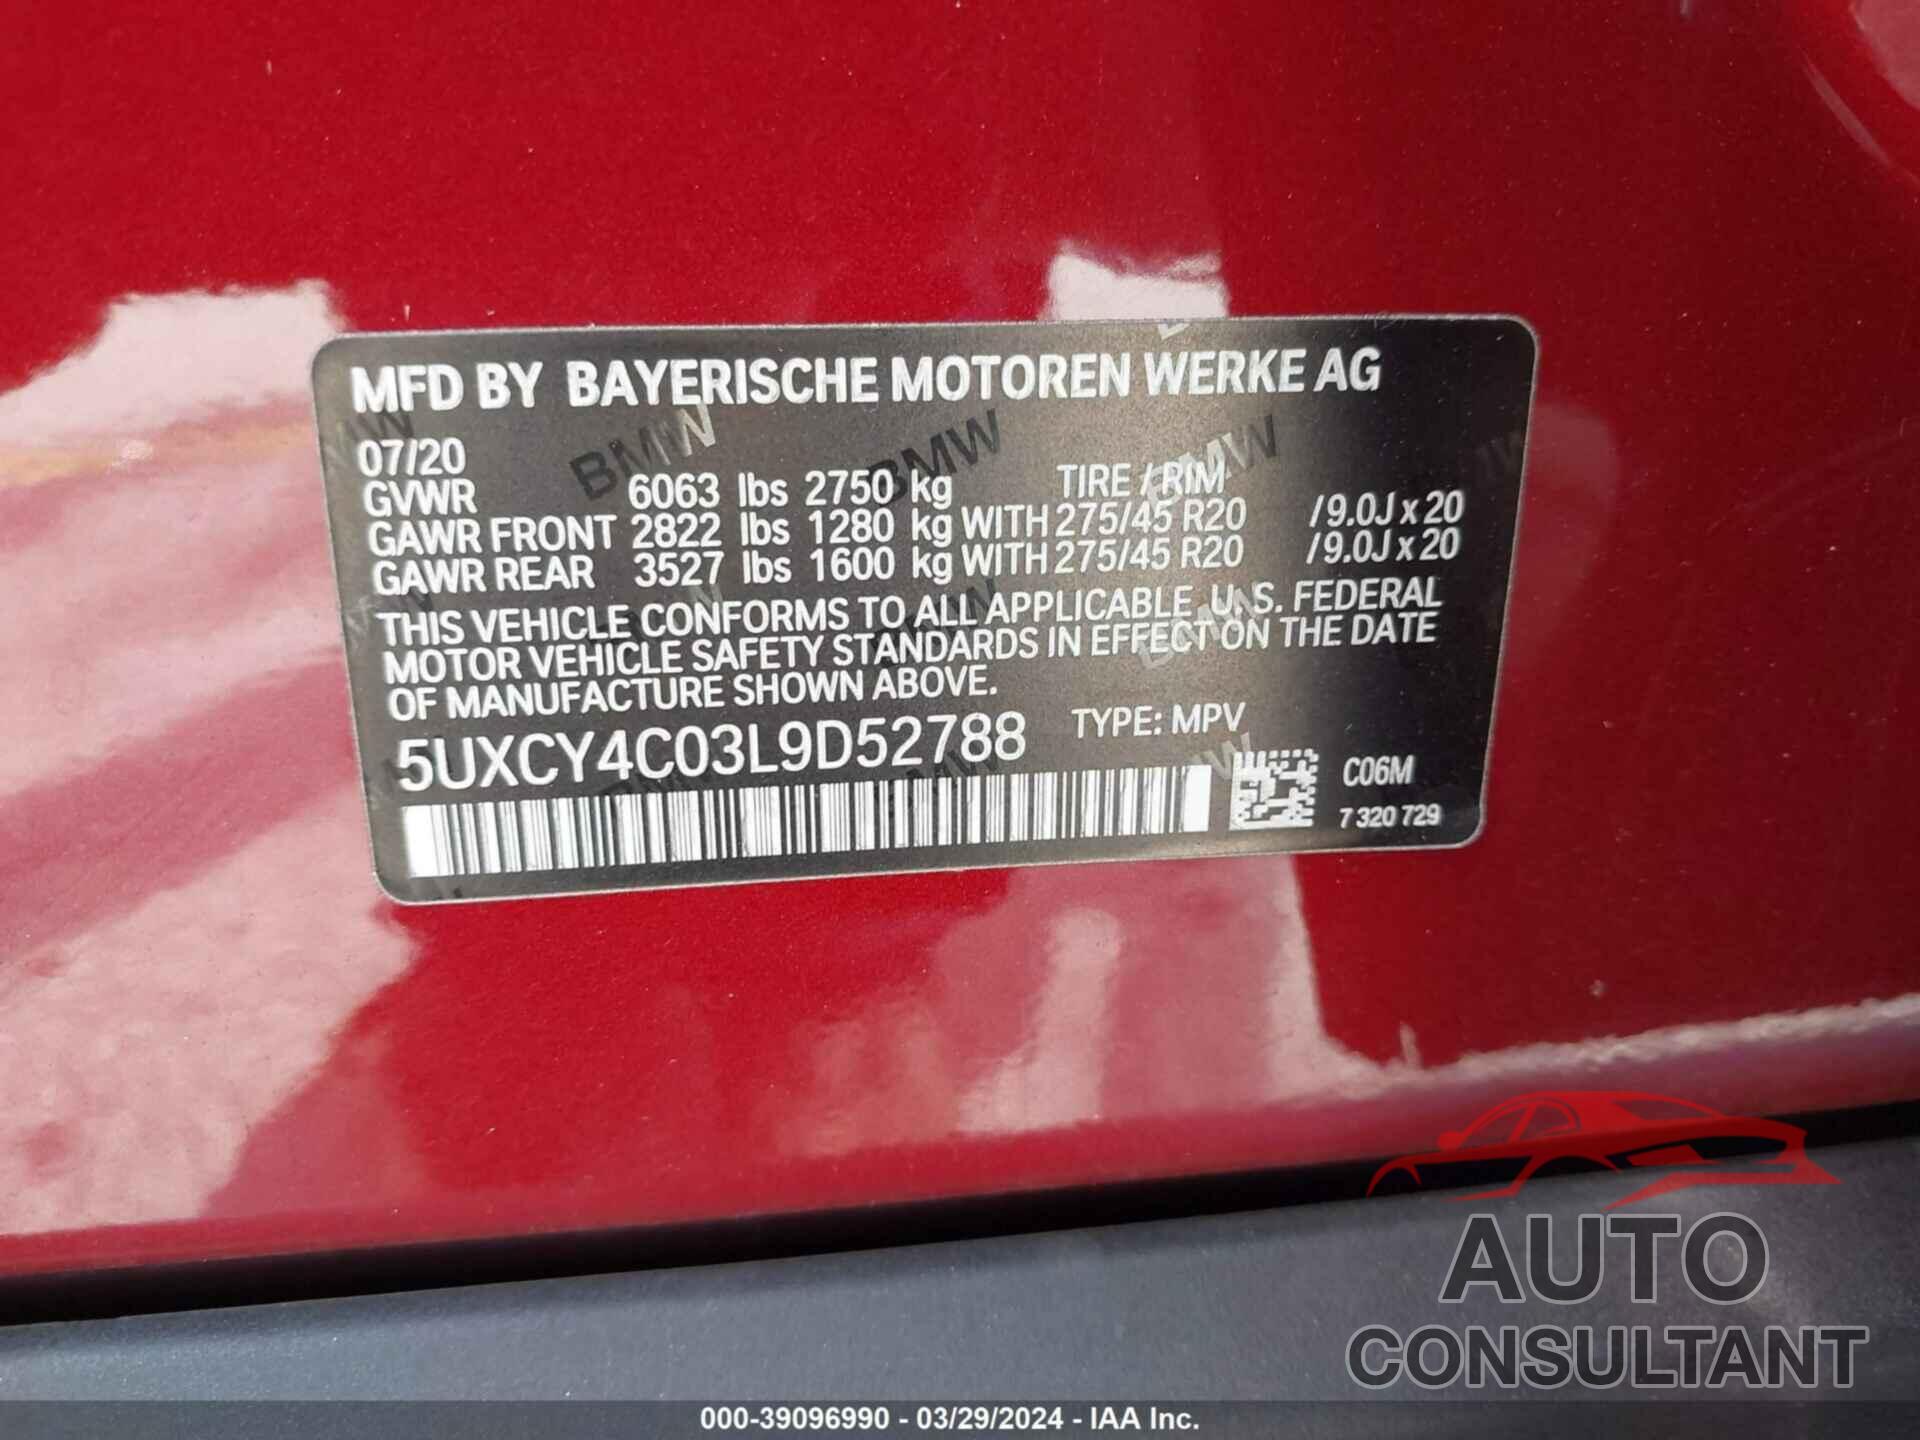 BMW X6 2020 - 5UXCY4C03L9D52788